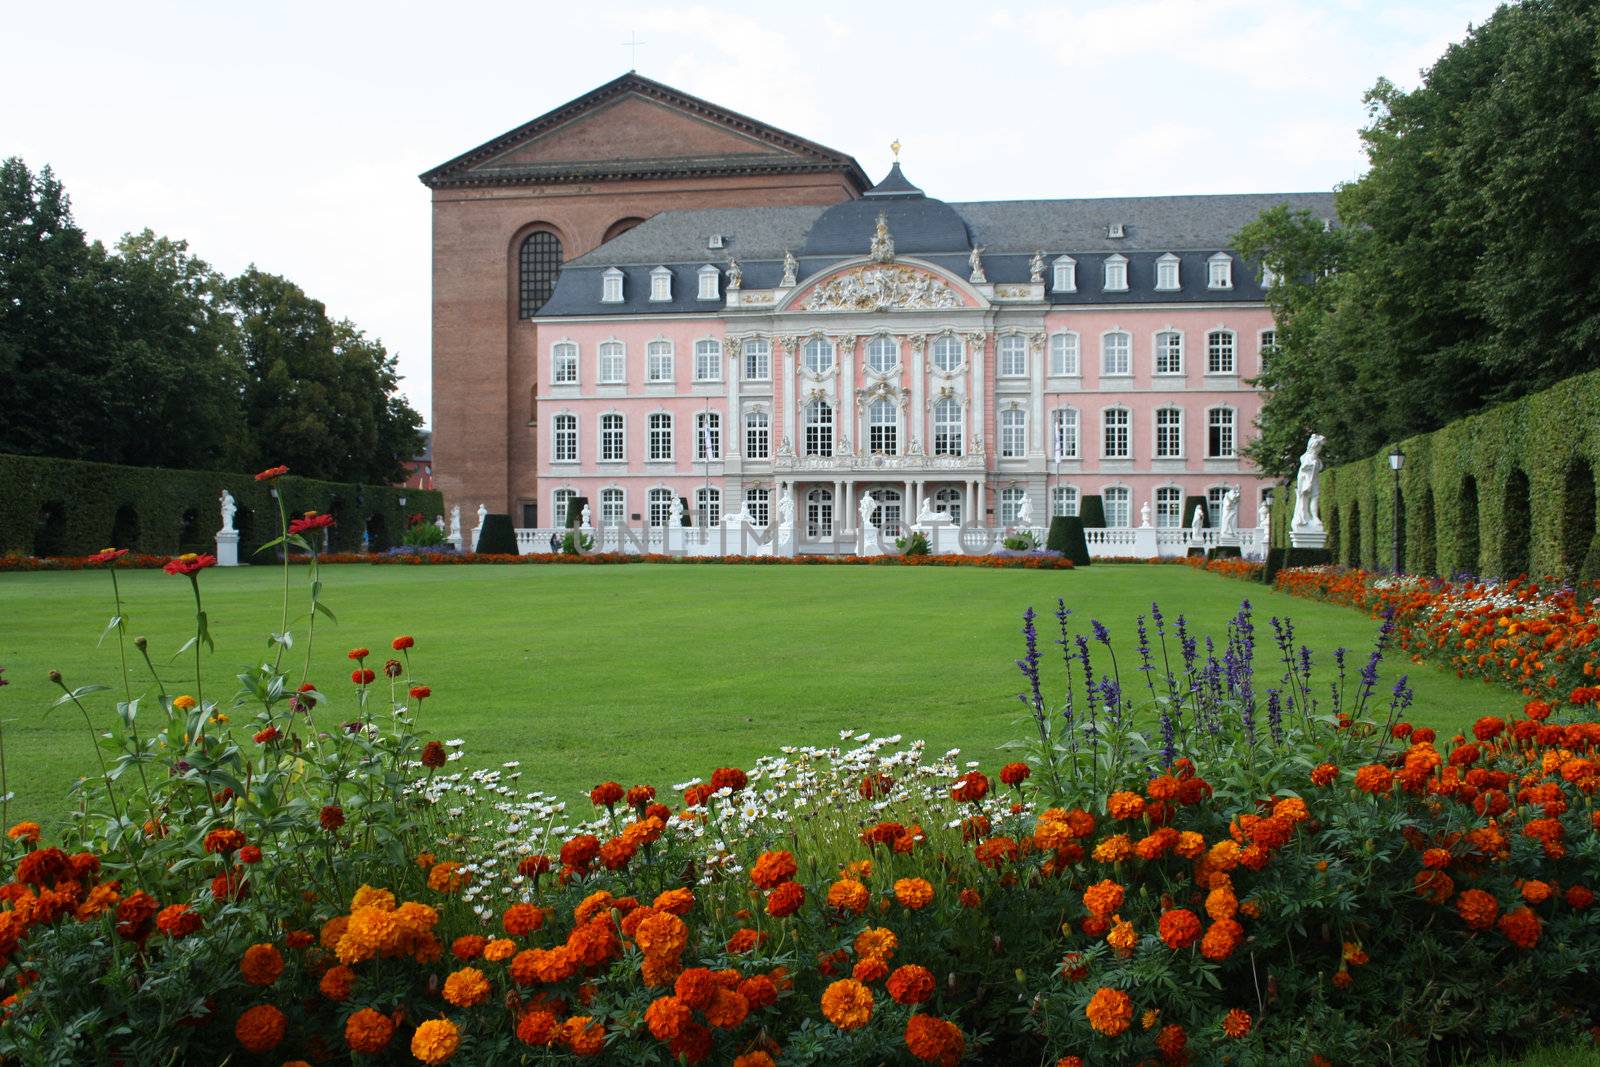 The Electors Palace of Trier, Rhineland-Palatinate, Germany.